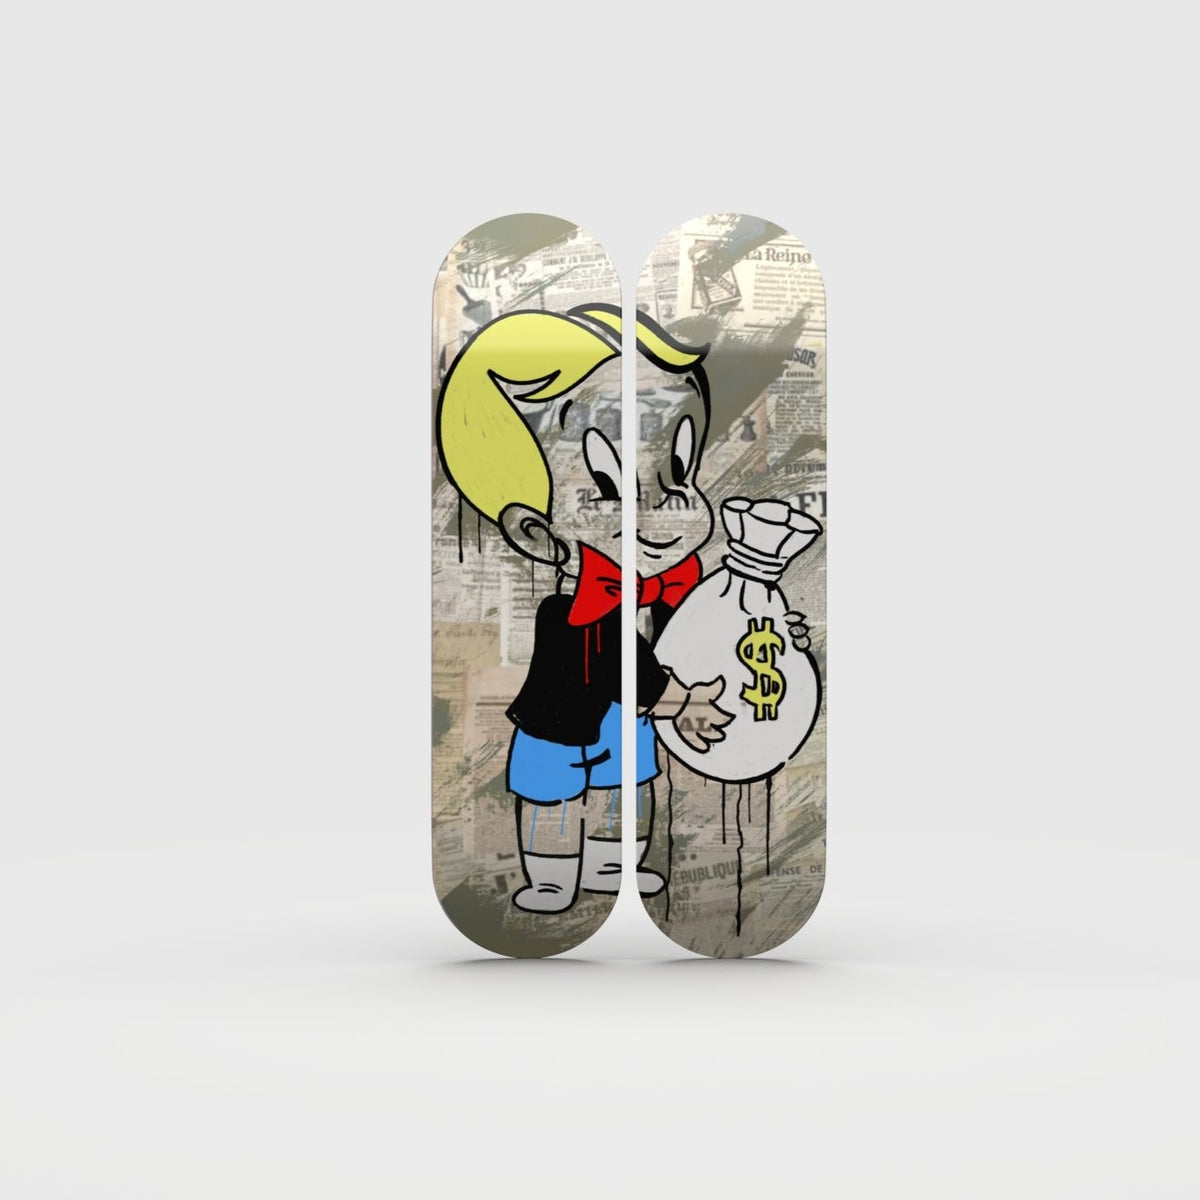 2-Piece Wall Art of Ricky Skateboard Design in Acrylic Glass - Retro